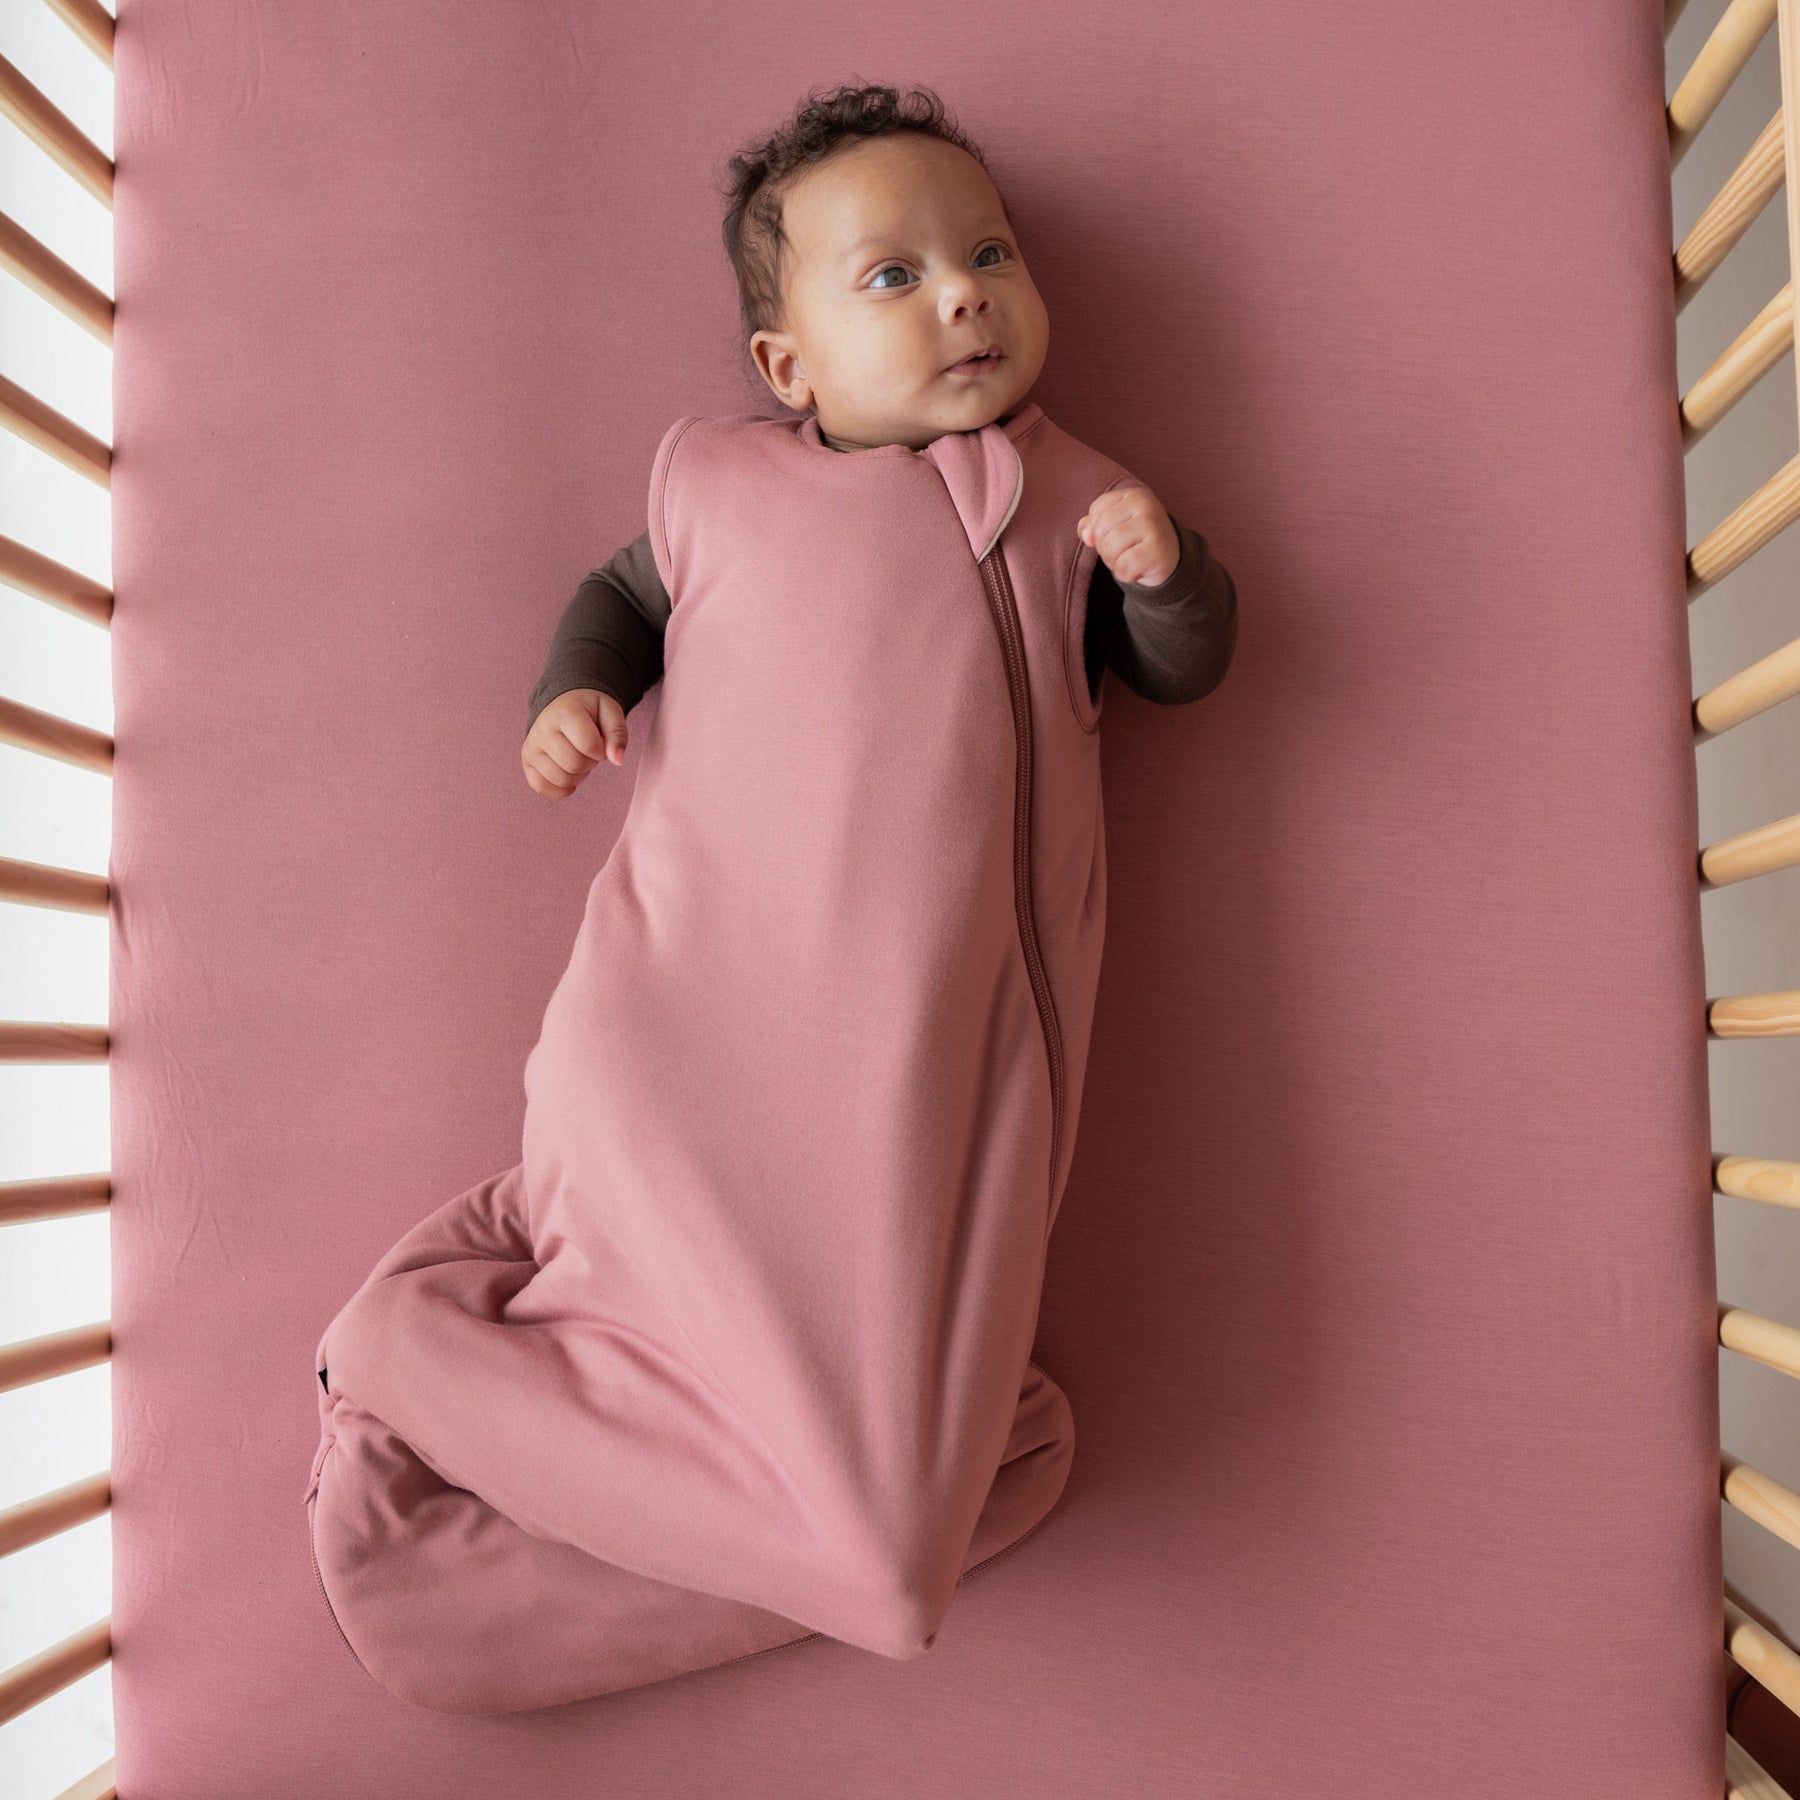 Infant wearing Kyte Baby Sleep Bag in Dusty Rose 1.0